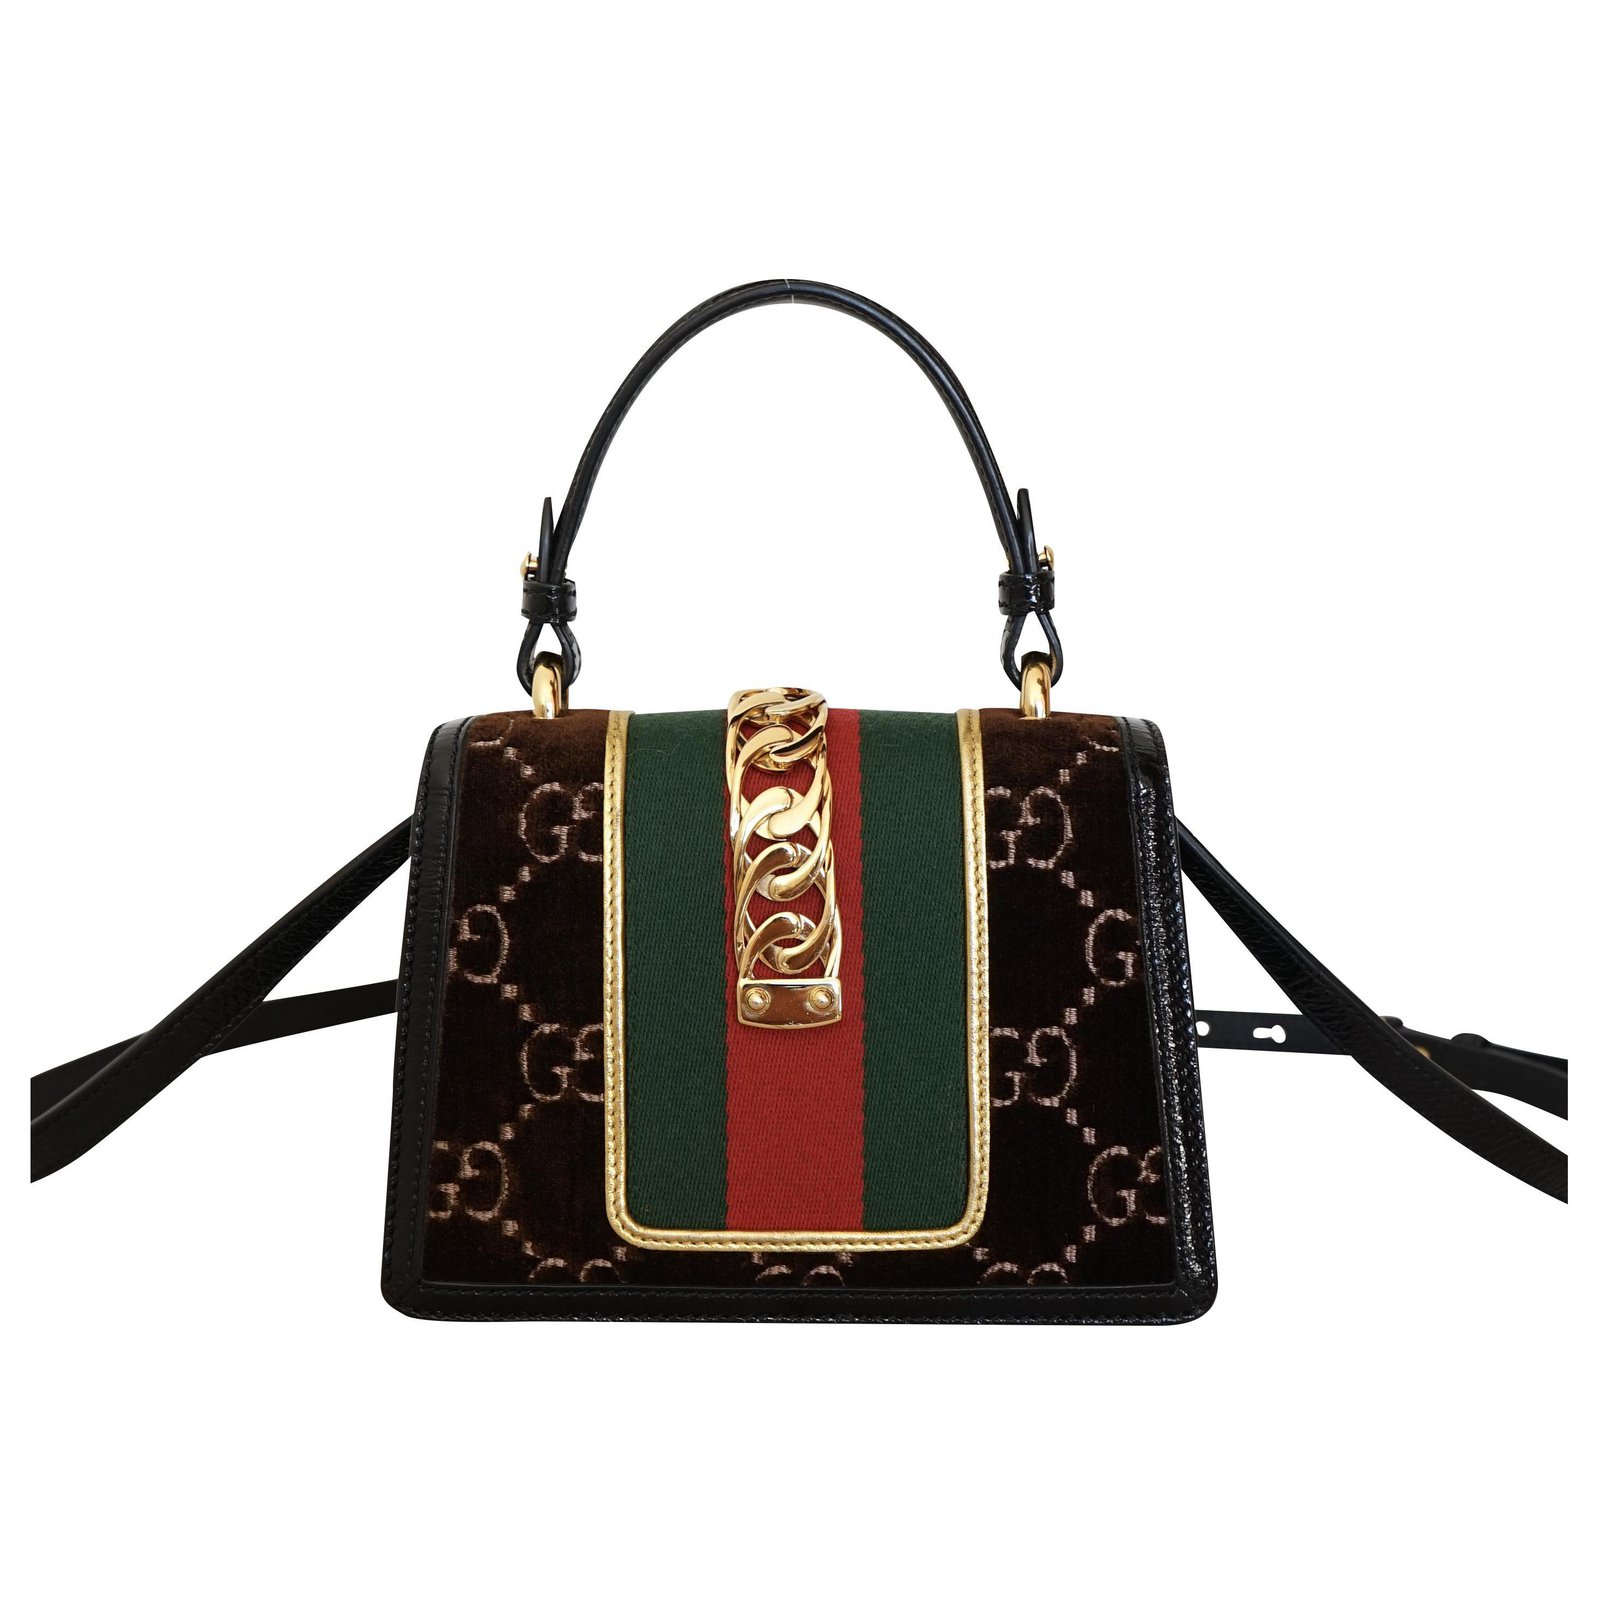 images of gucci handbags